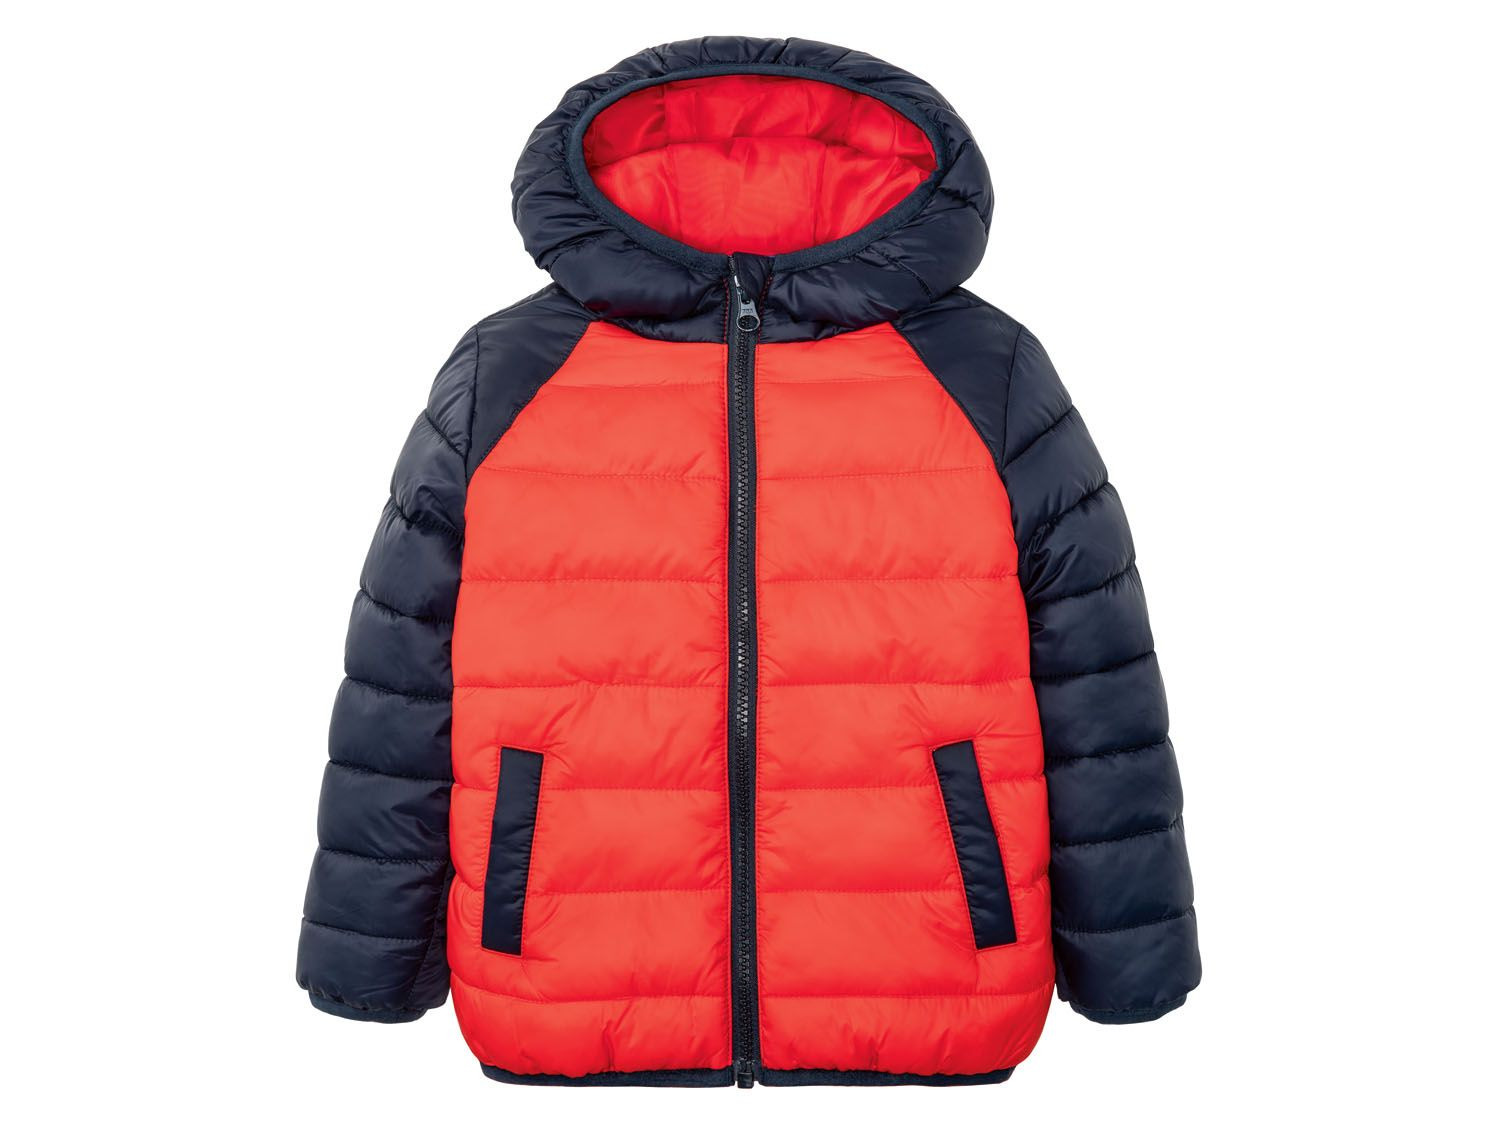 Kinder Jungs Outdoorbekleidung Jacken Lupilu Jacken tolle Winterjacke 